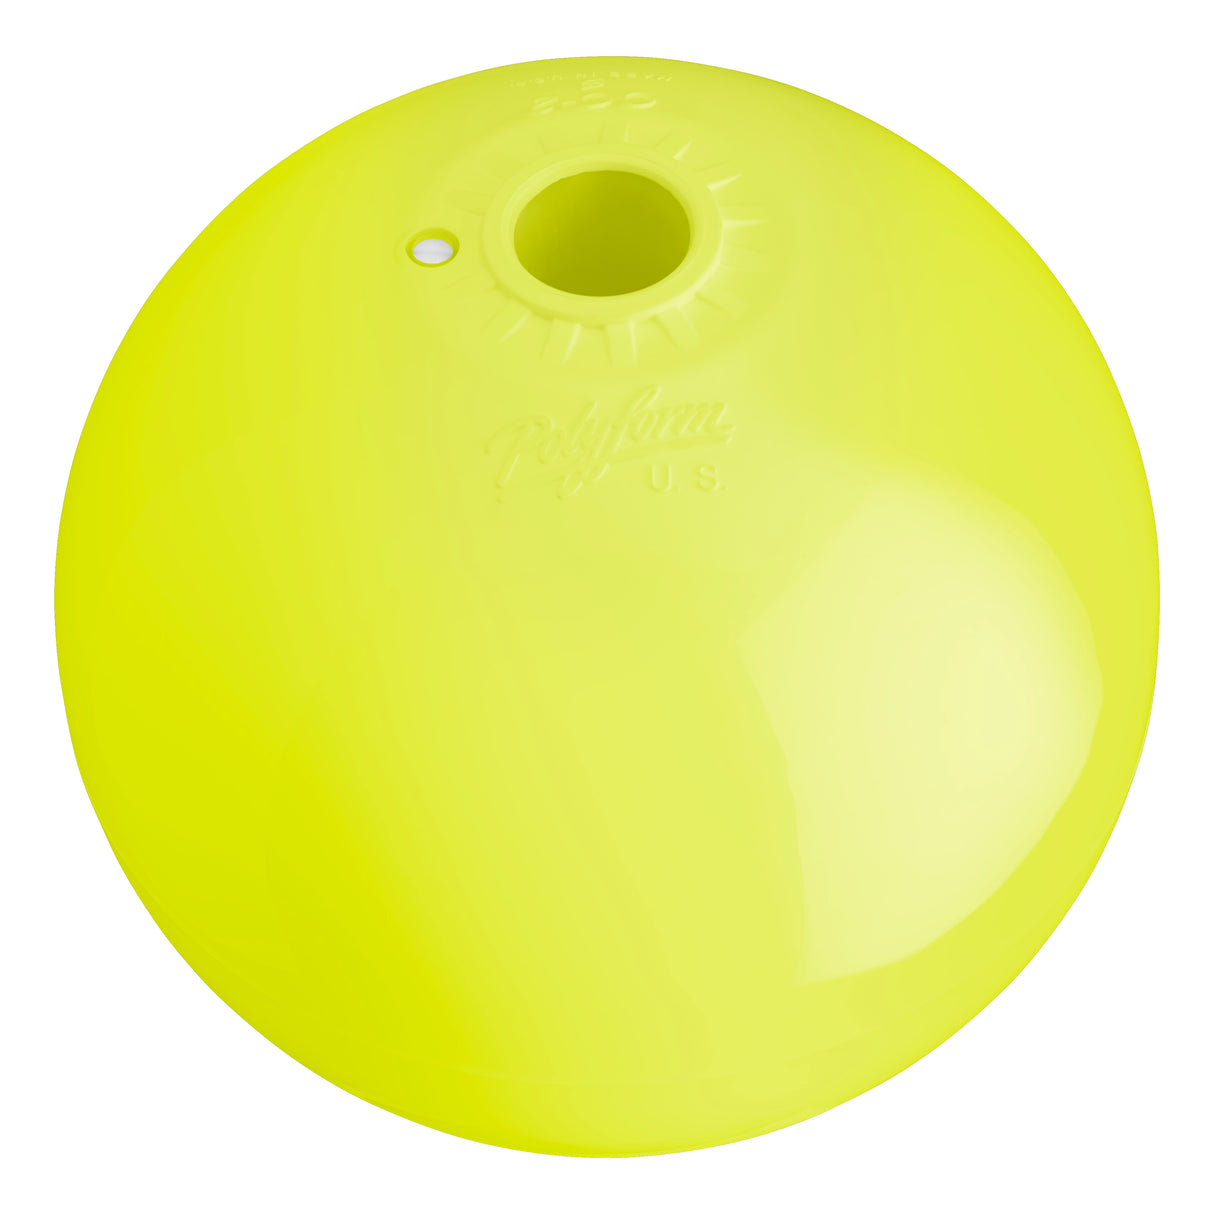 Hole through center mooring and marker buoy, Polyform CC-4 Saturn Yellow angled shot